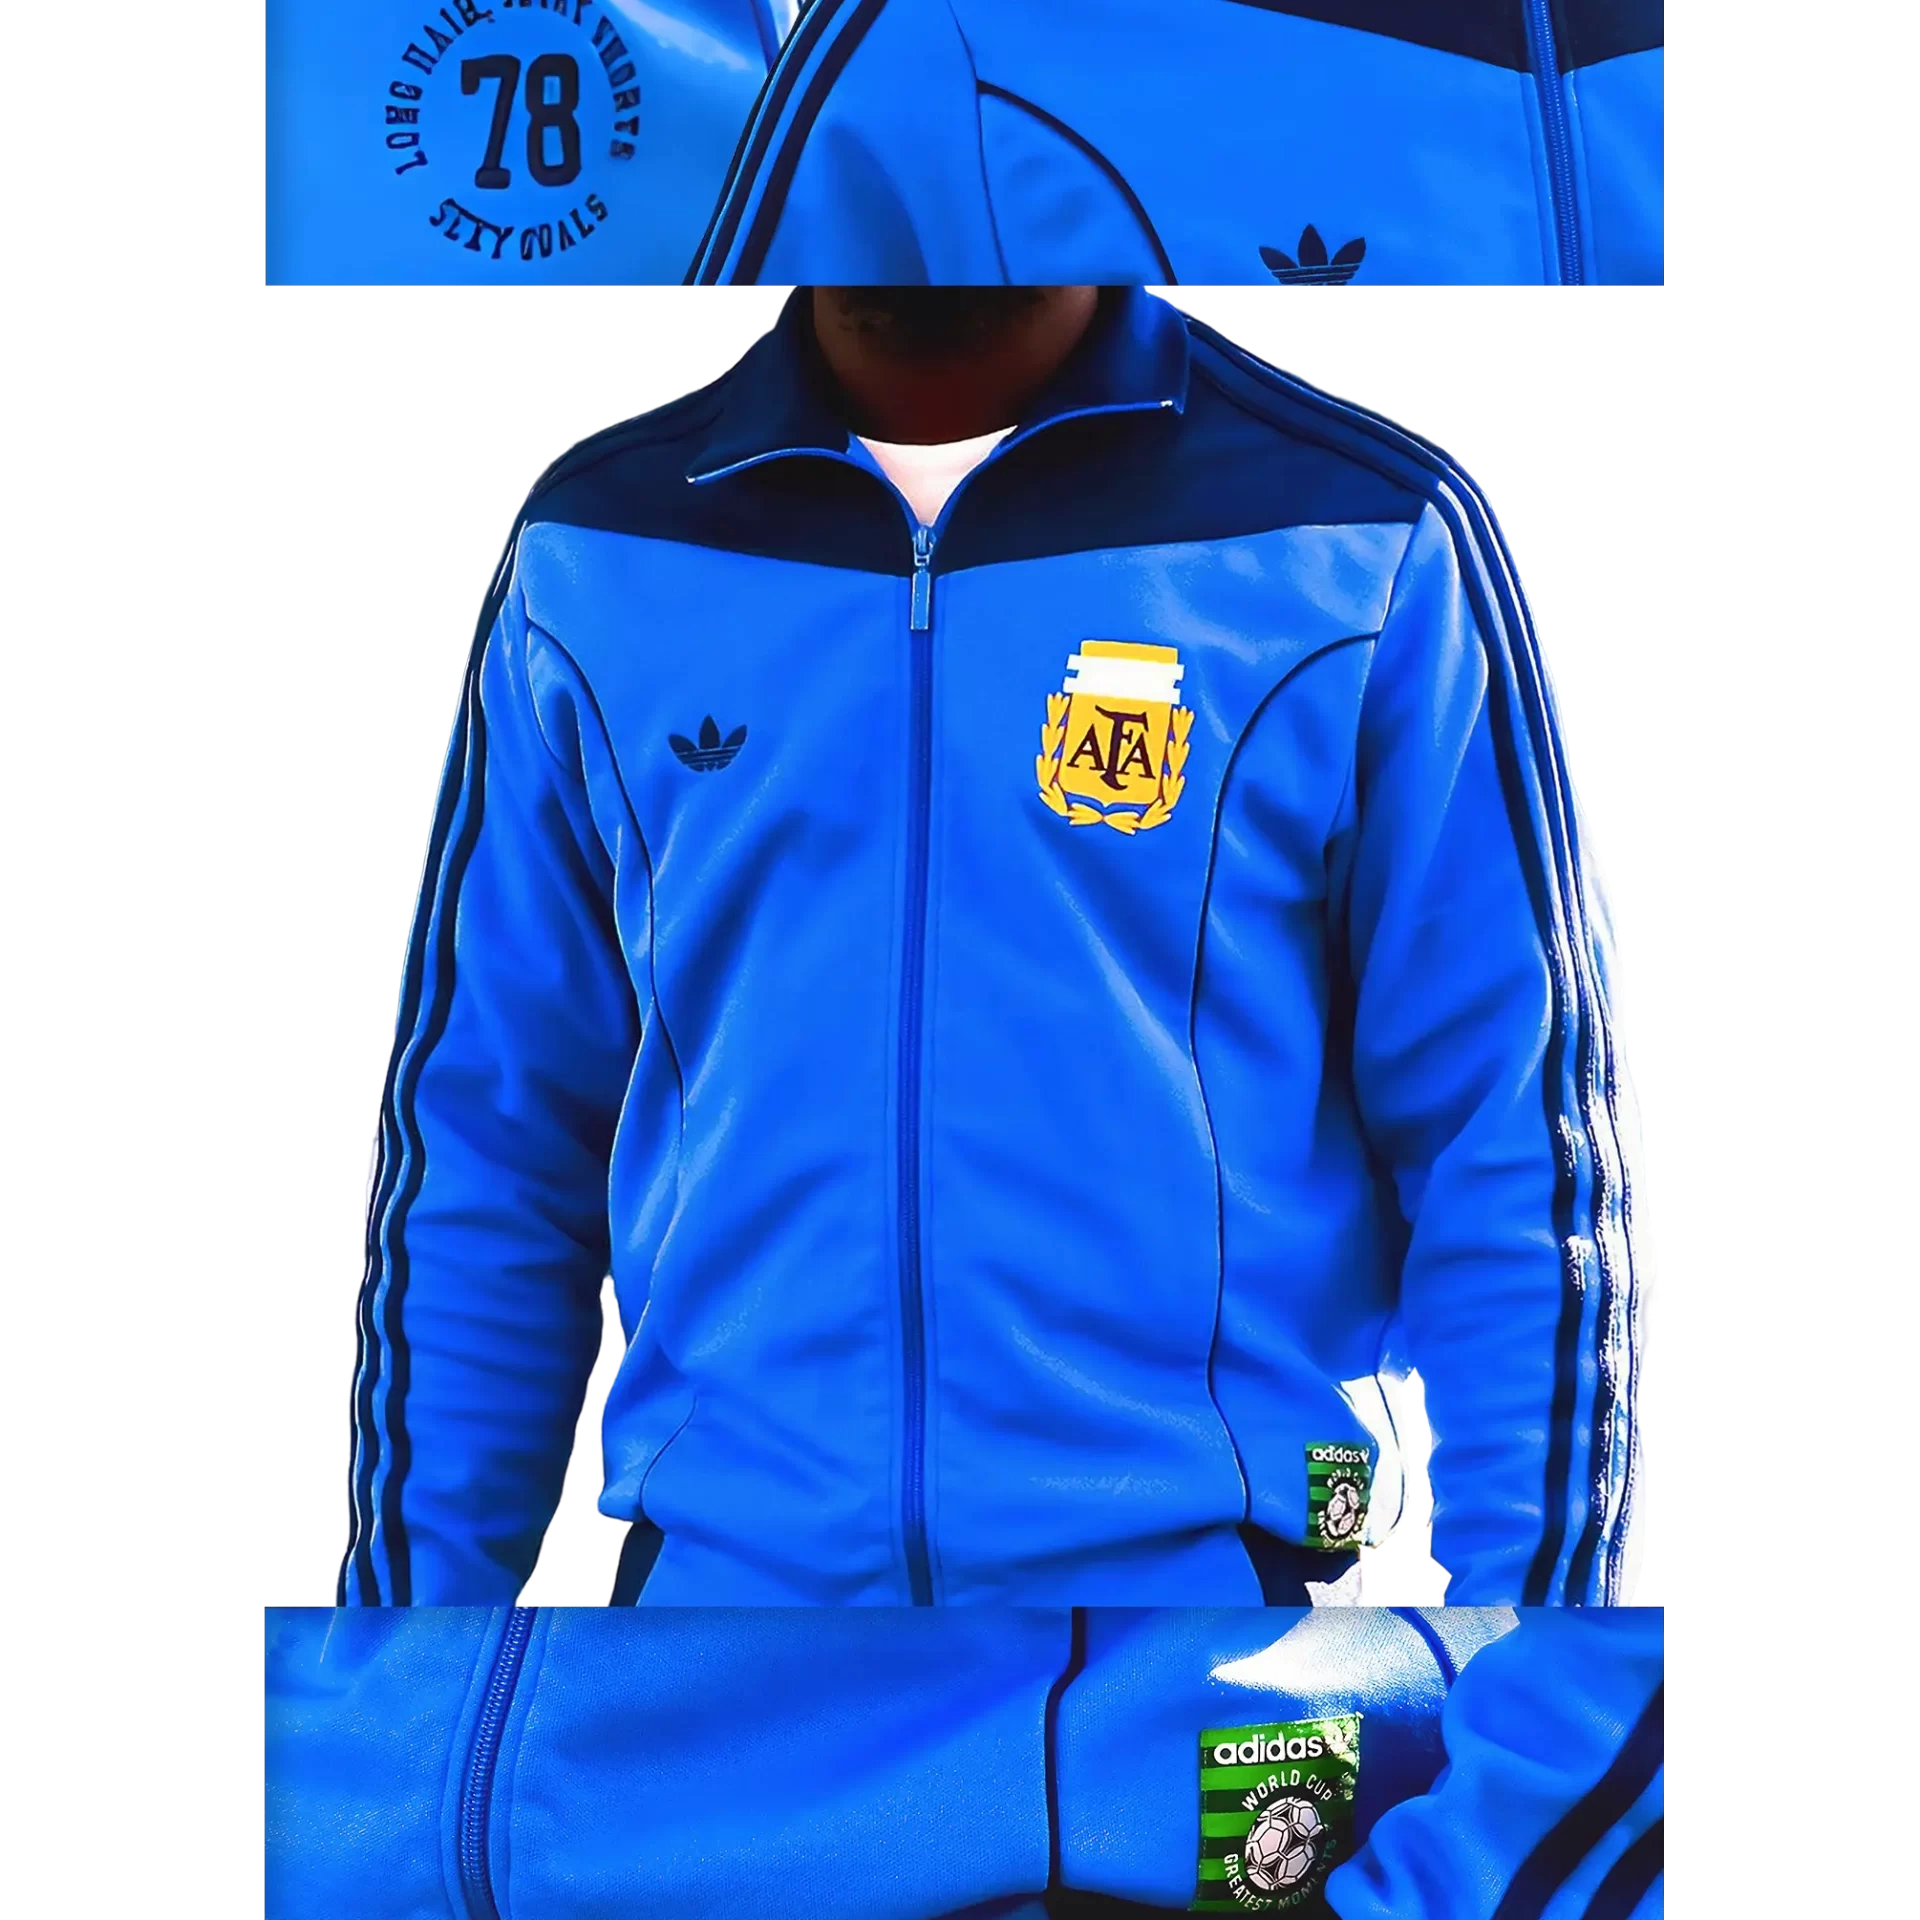 Men's 2005 Argentina WC '78 TT by Adidas Originals: Impressive (EnLawded.com file #lmchk40261ip2y121433kg9st)